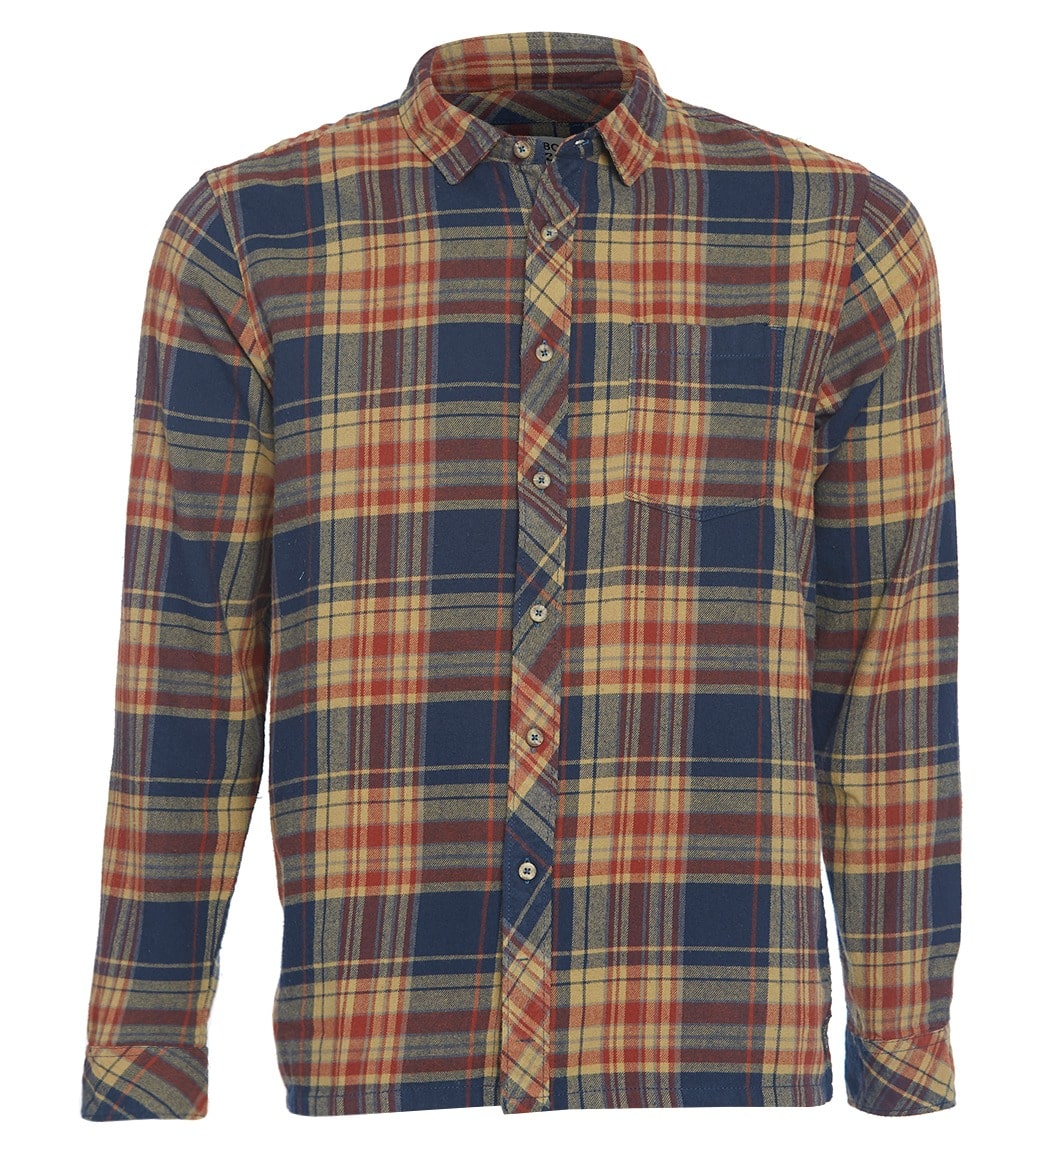 Billabong Men's Coastline Flannel Shirt - Navy Blue Small Cotton/Polyester - Swimoutlet.com